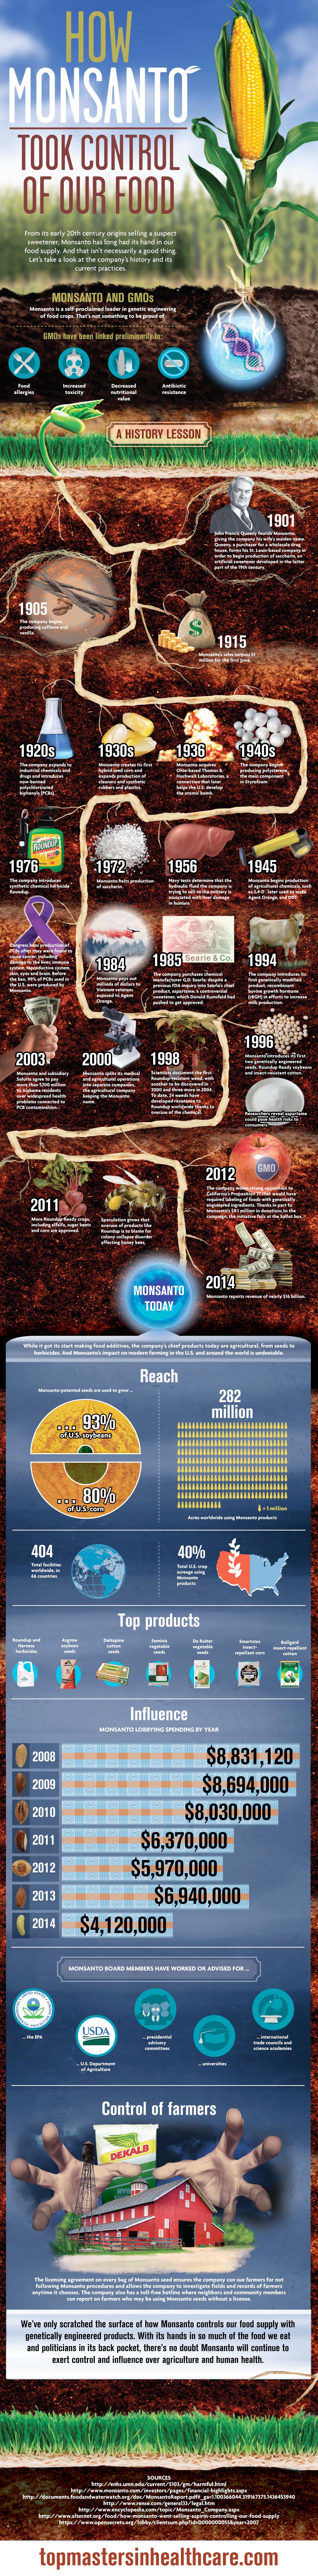 Monsanto's History